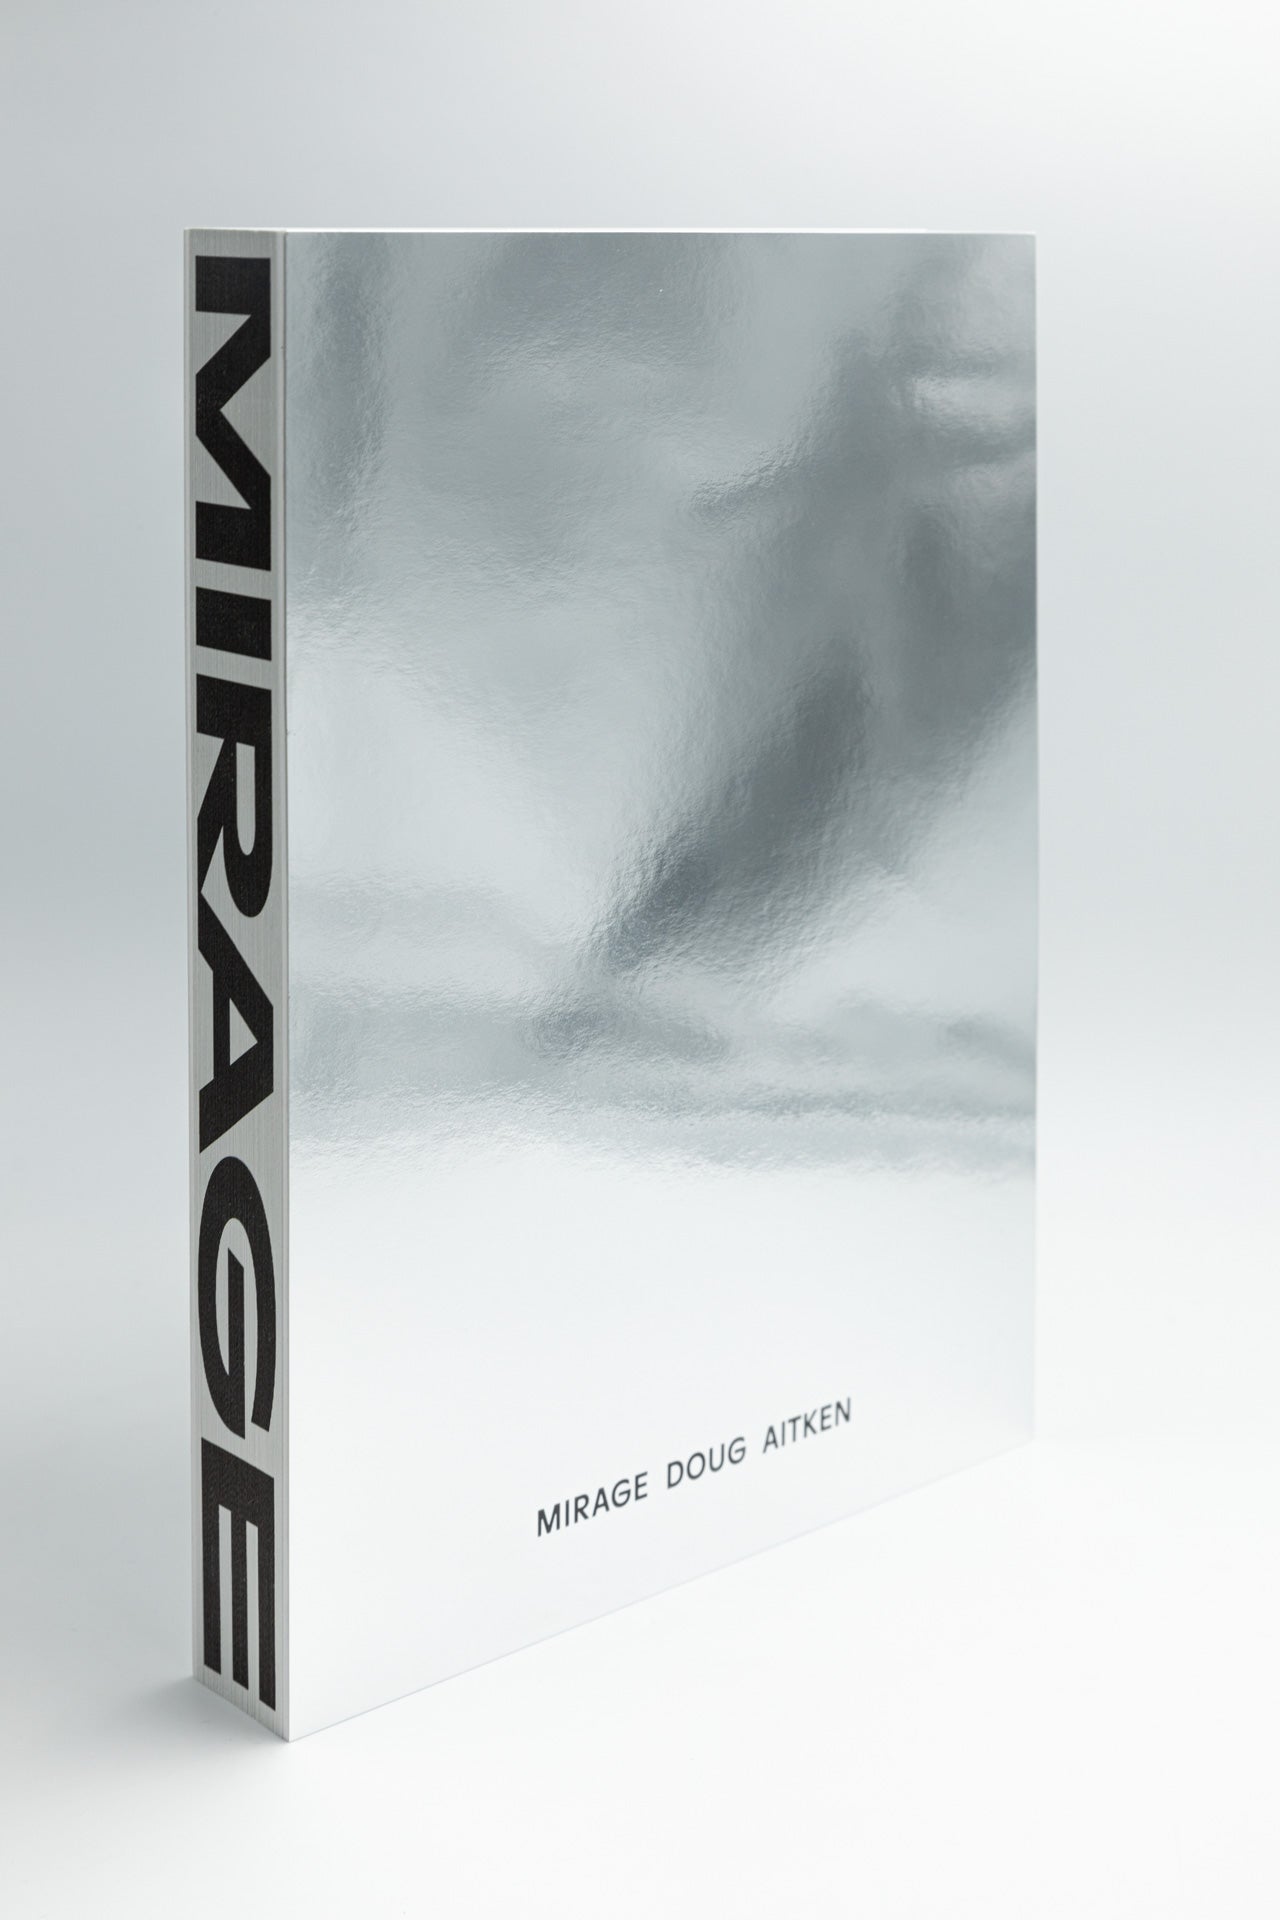 Doug Aitken – Mirage